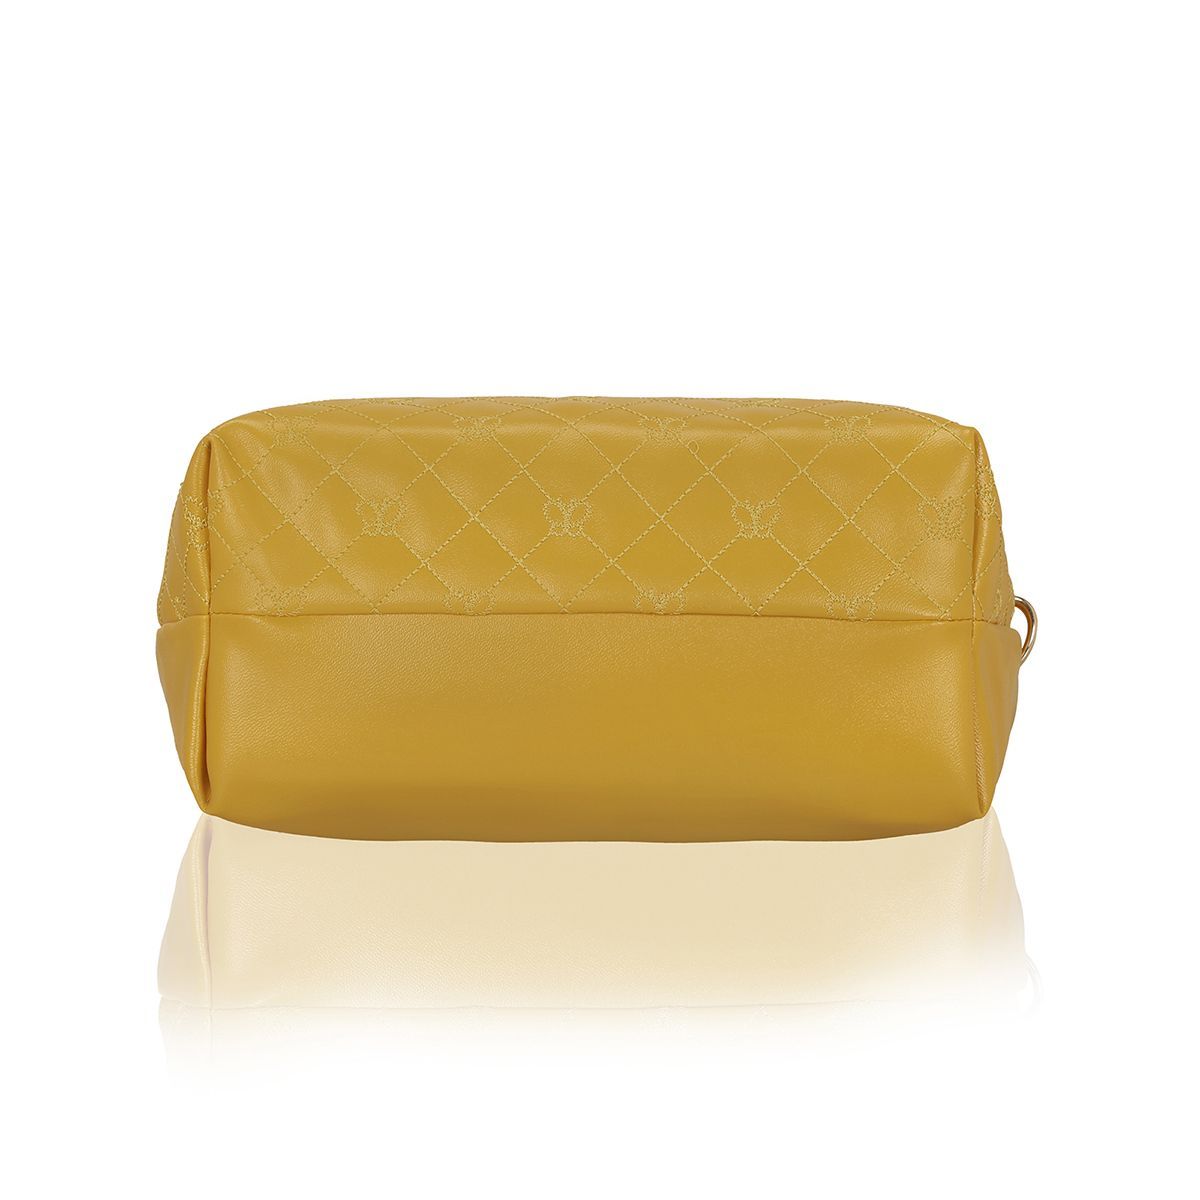 Vera Pelle Amber Yellow Italian Leather Crossbody Shoulder Purse Bag | eBay